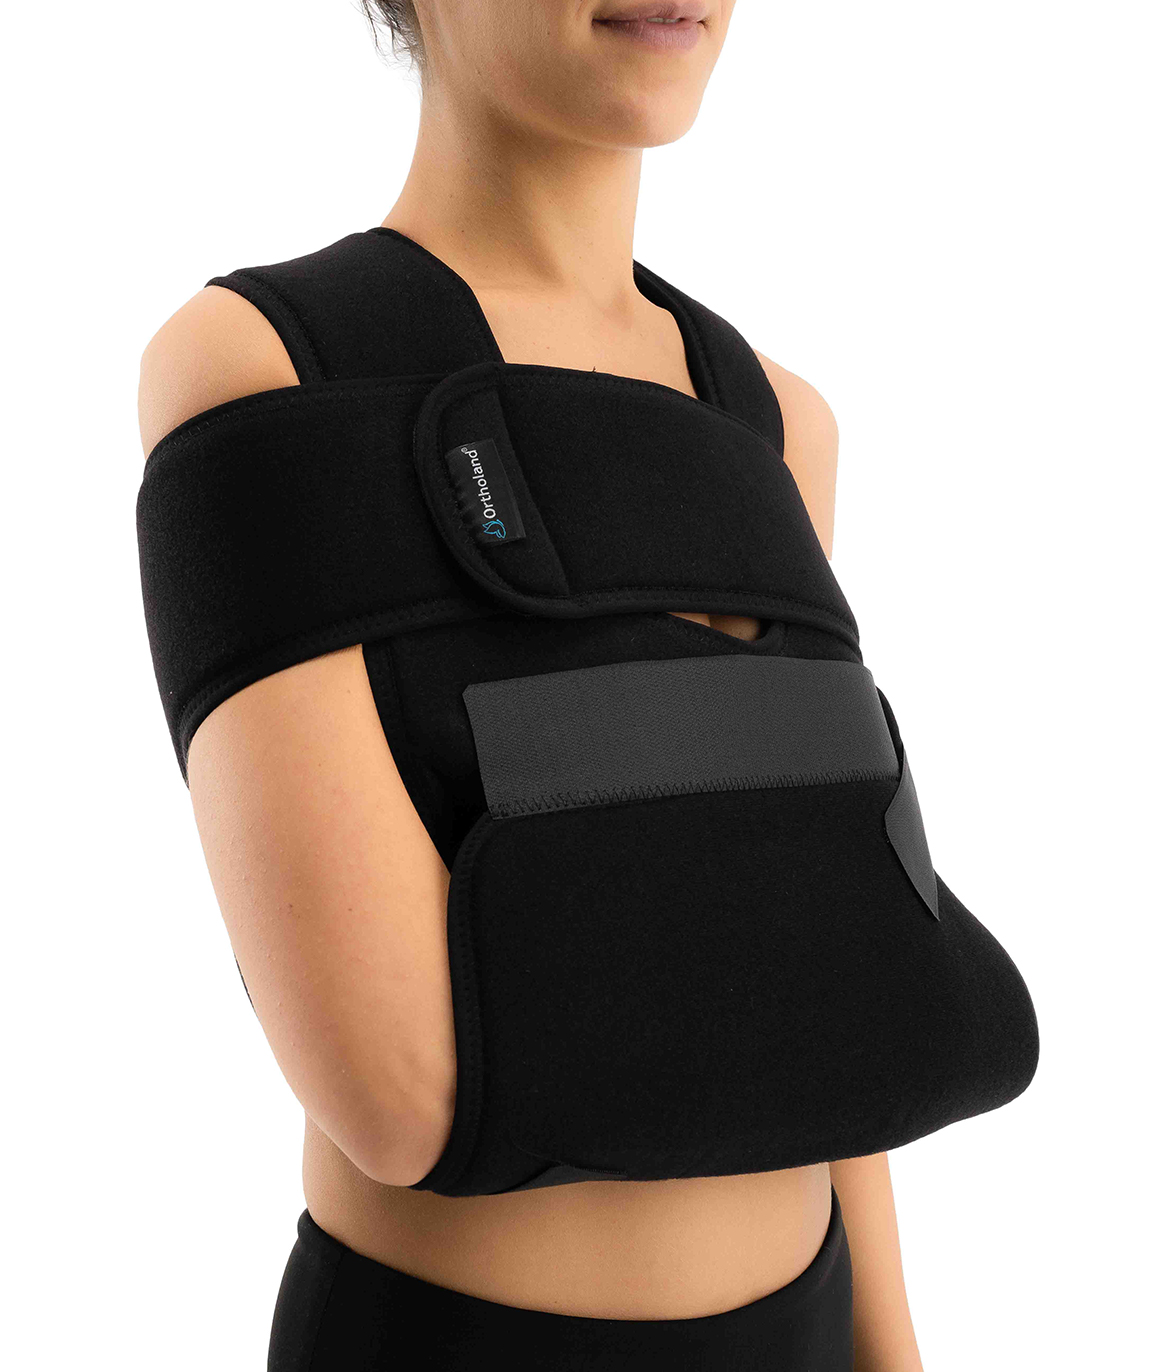 Velpeau Bandage  Hand - Arm - Shoulder splint supports